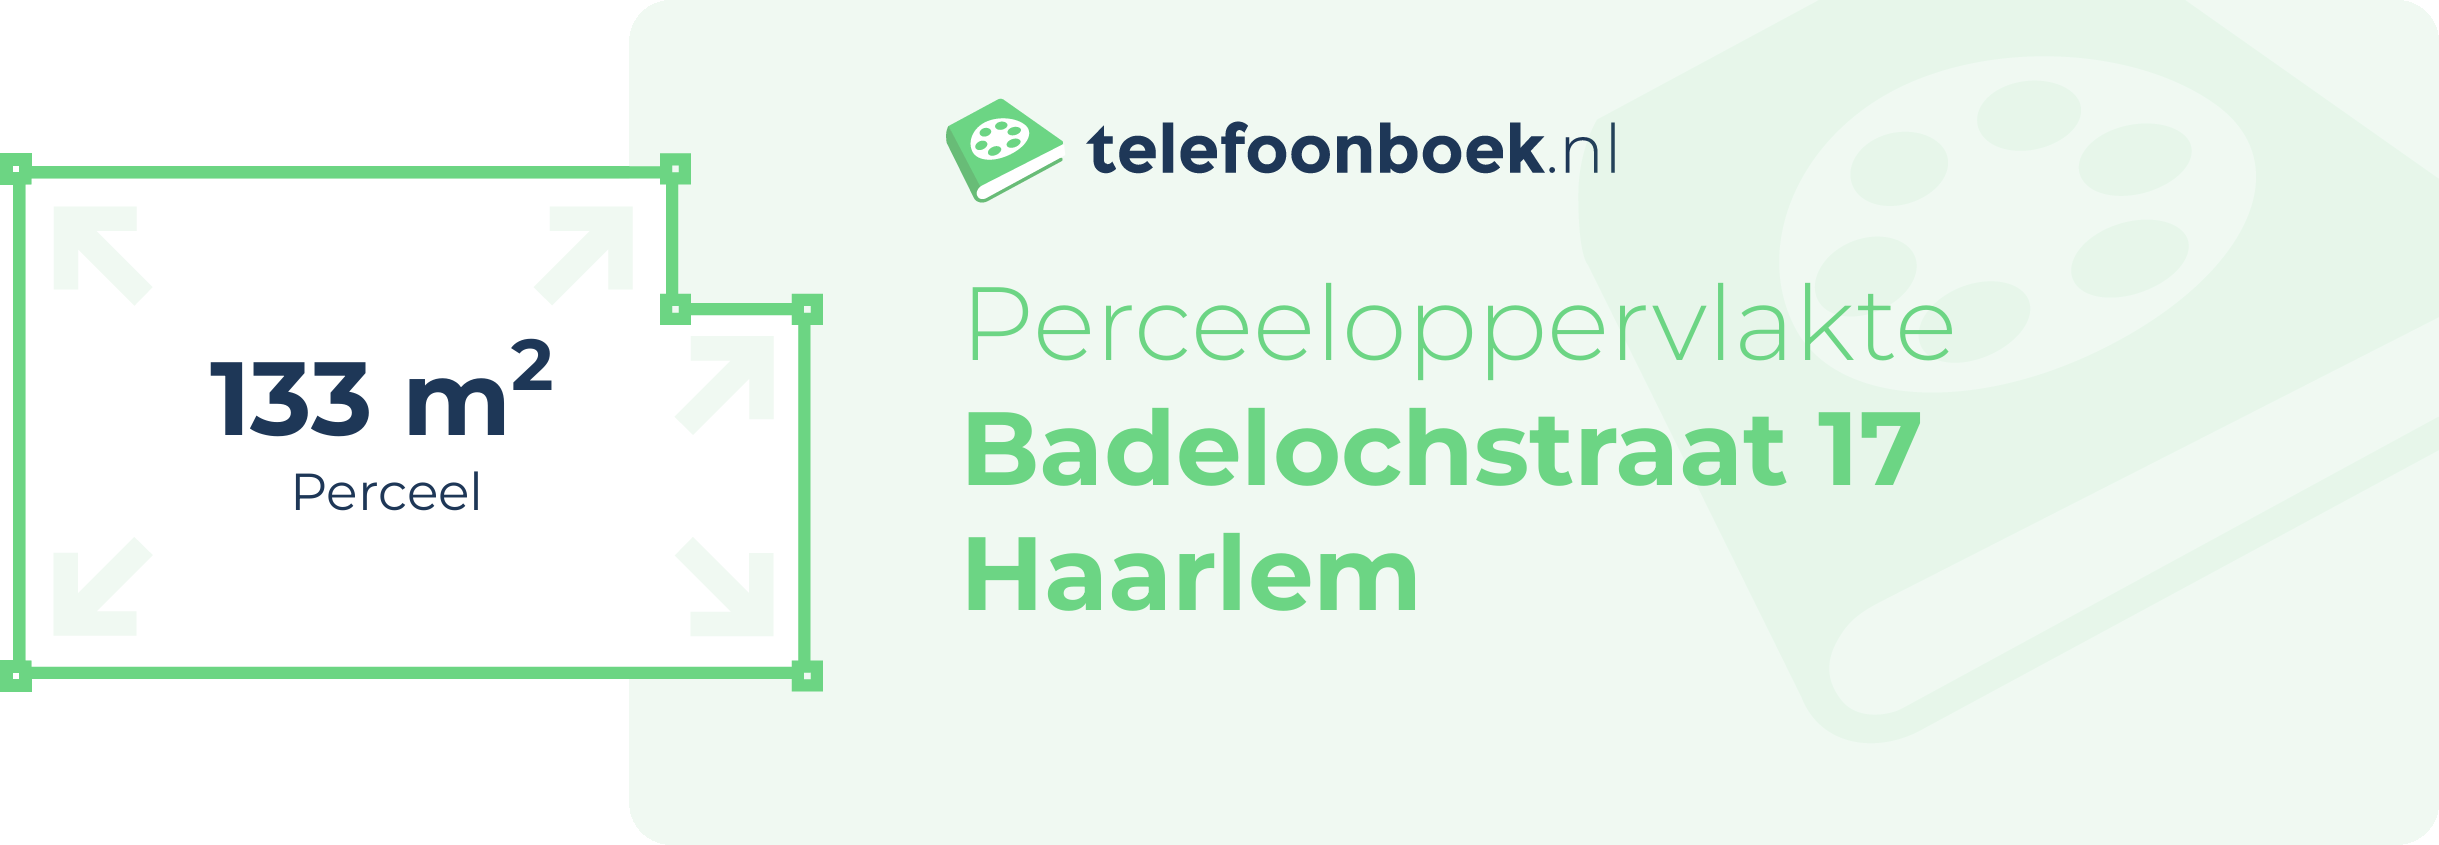 Perceeloppervlakte Badelochstraat 17 Haarlem